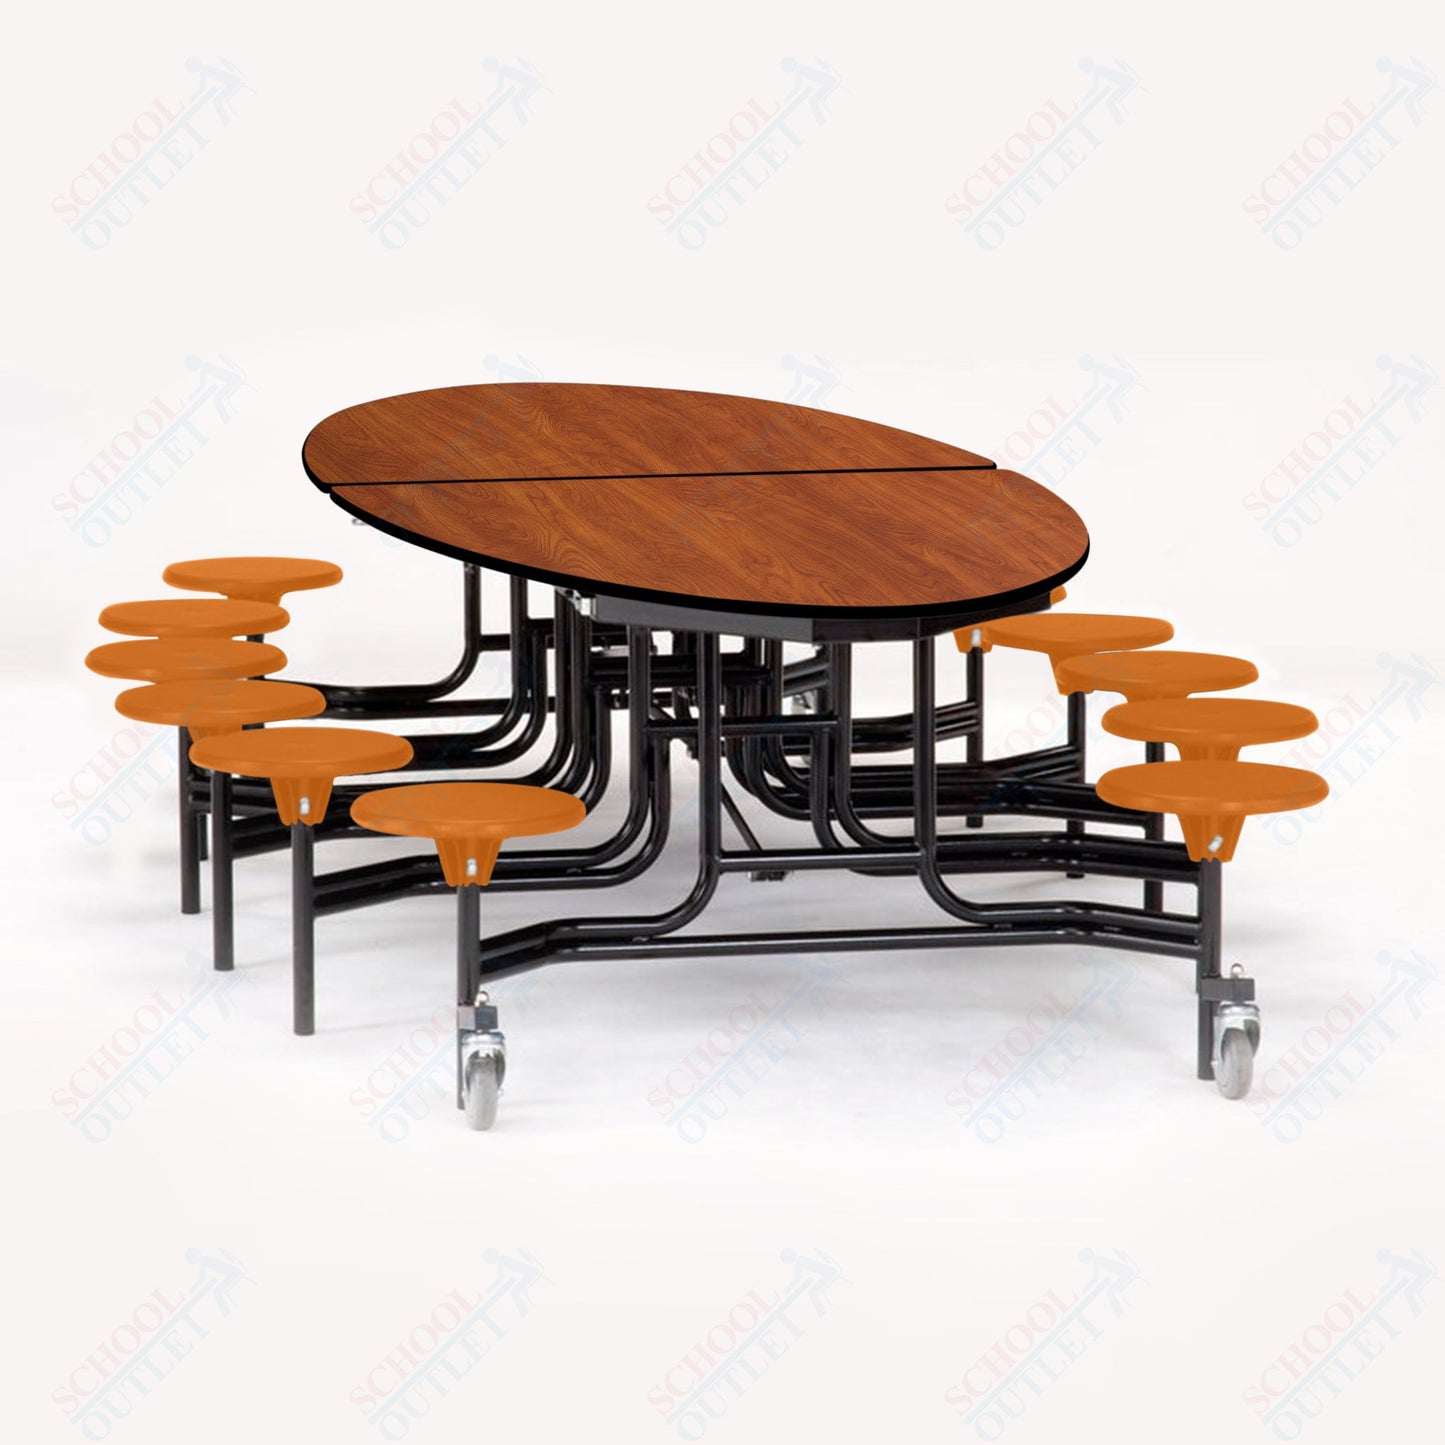 NPS 10' Elliptical Mobile Cafeteria Table - 12 Stools - Plywood Core - T-Molding Edge - Chrome Frame